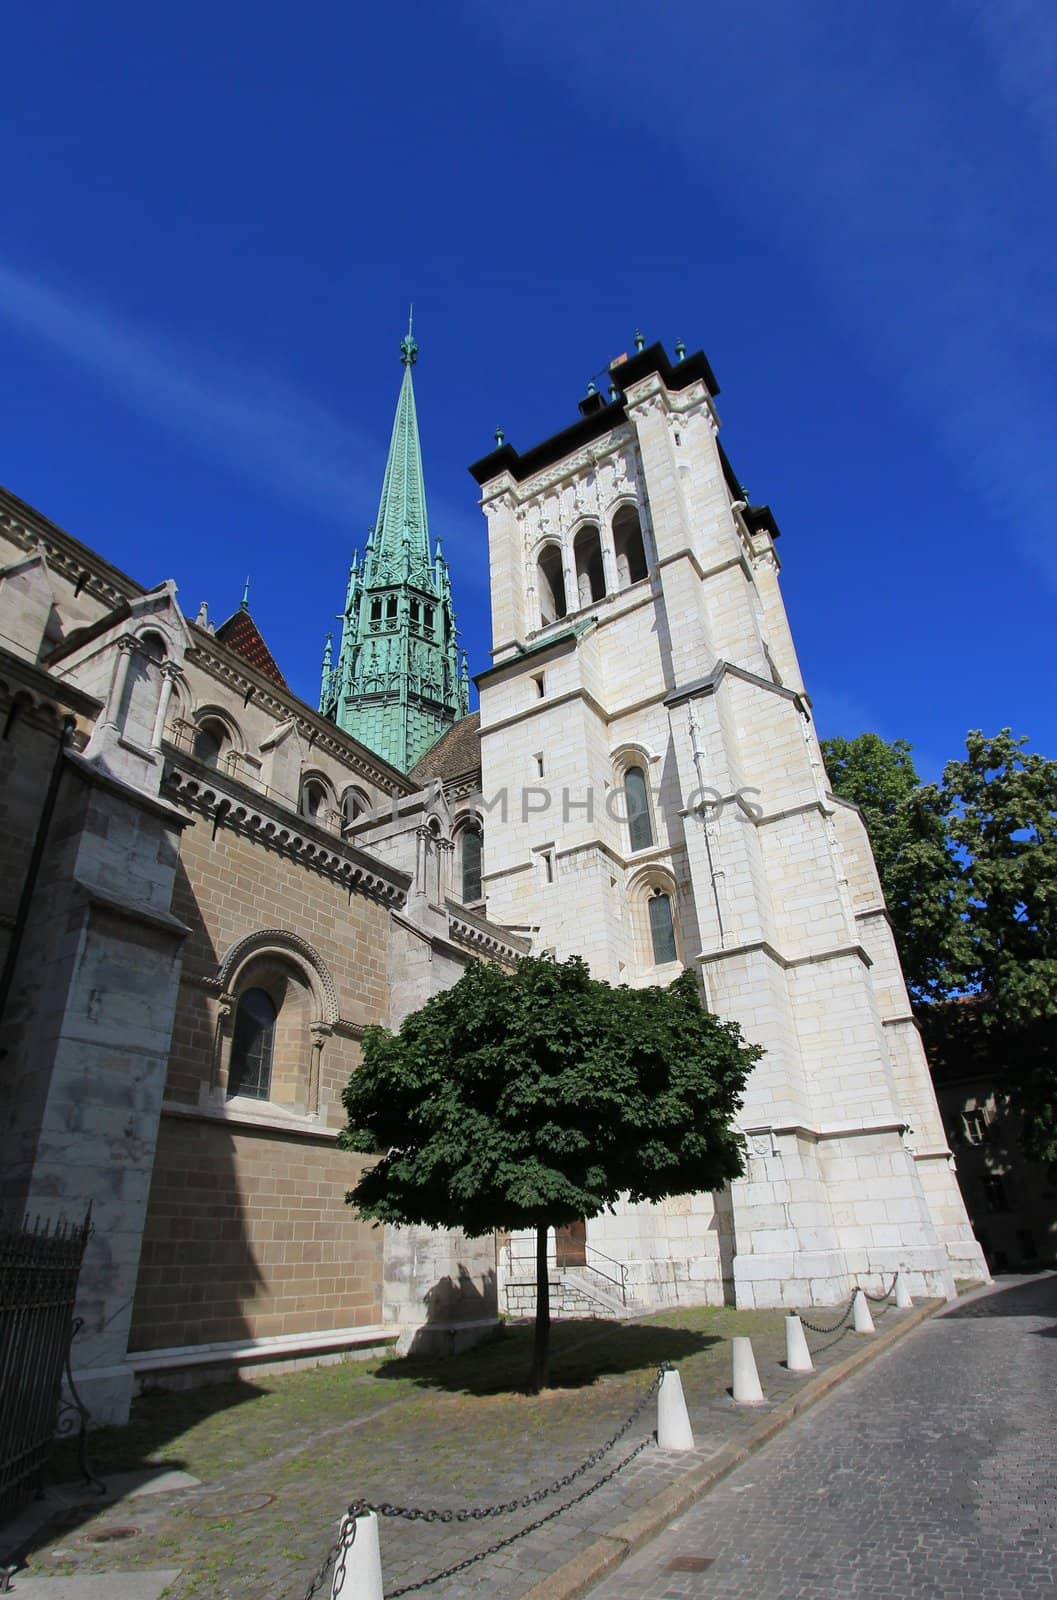 Saint-Peter's cathedral in Geneva, Switzerland by Elenaphotos21